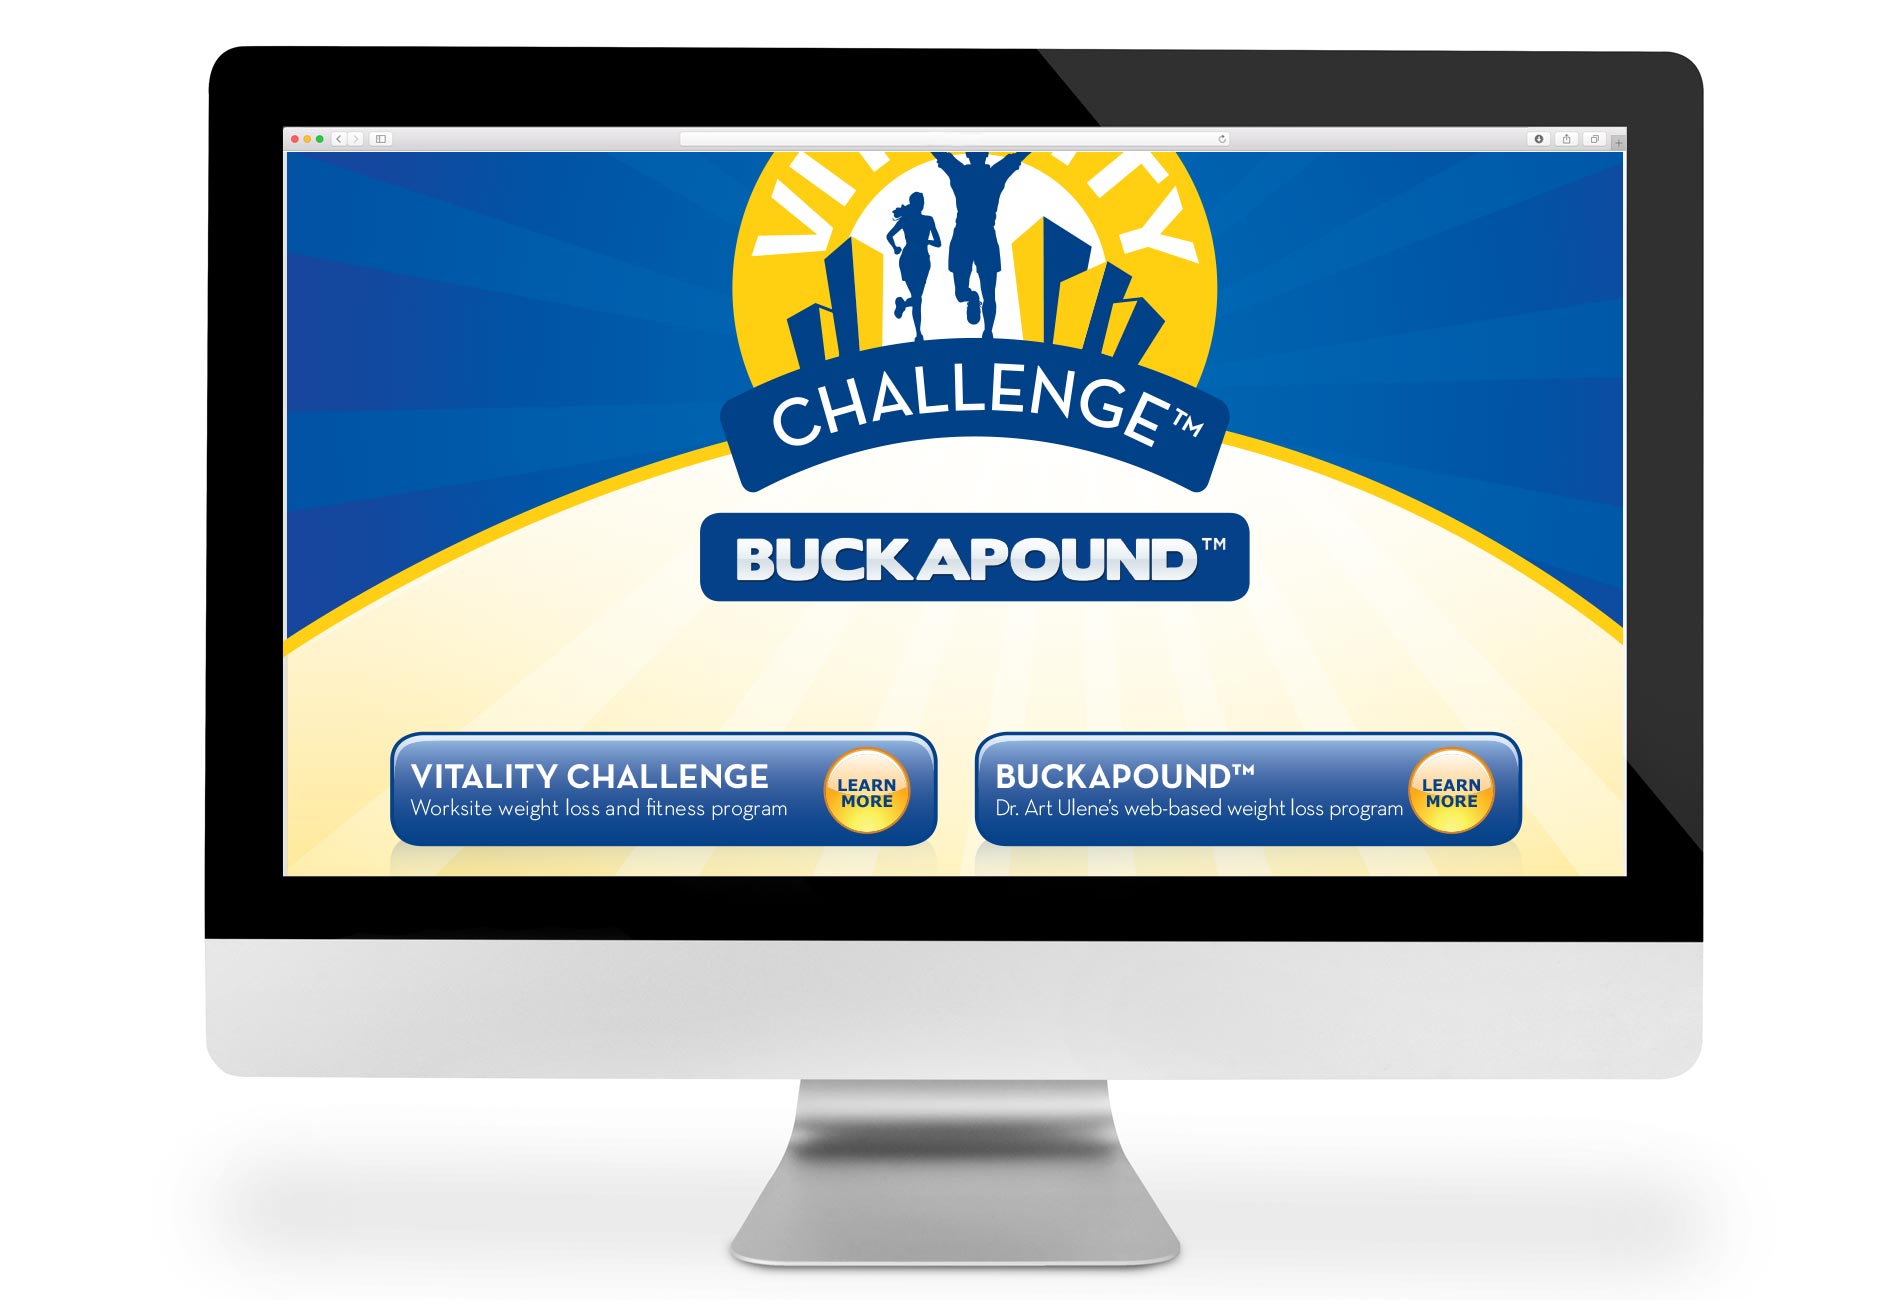 Vitality Challenge landing page